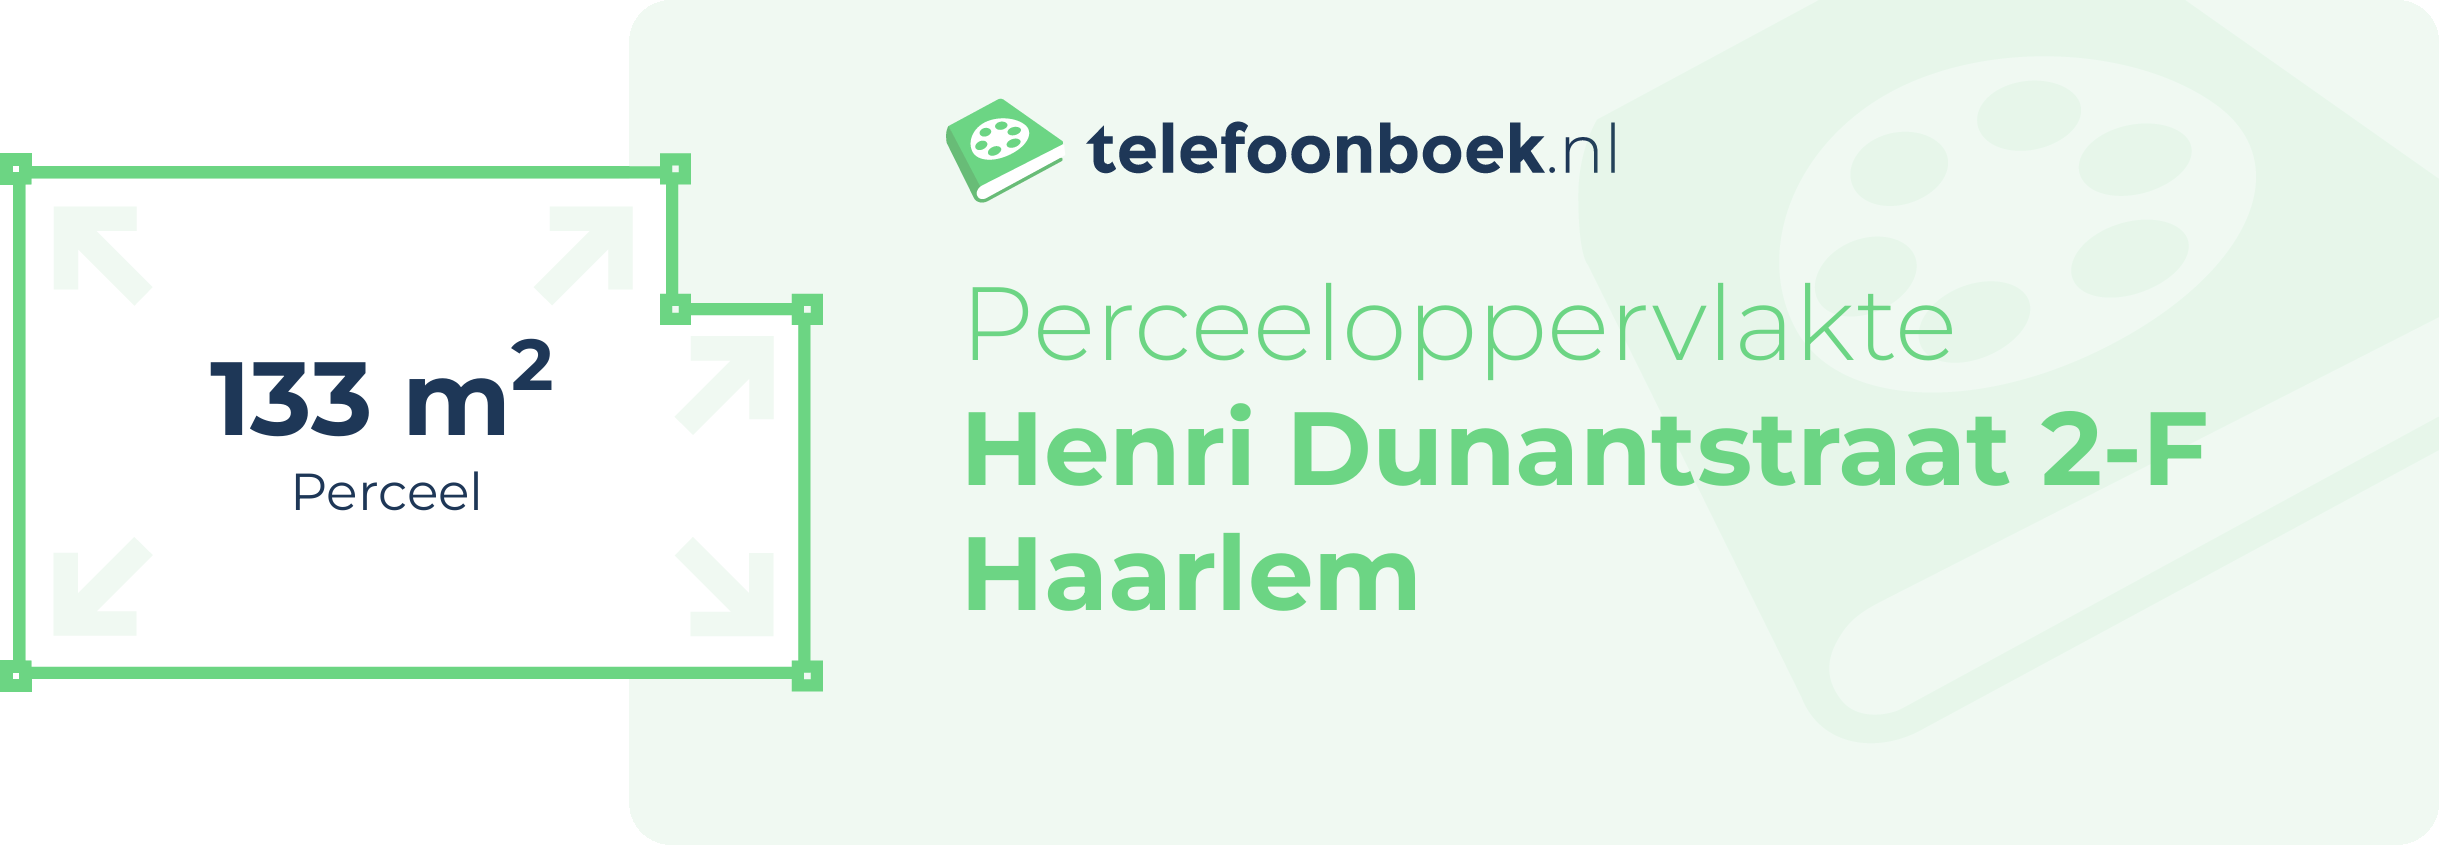 Perceeloppervlakte Henri Dunantstraat 2-F Haarlem